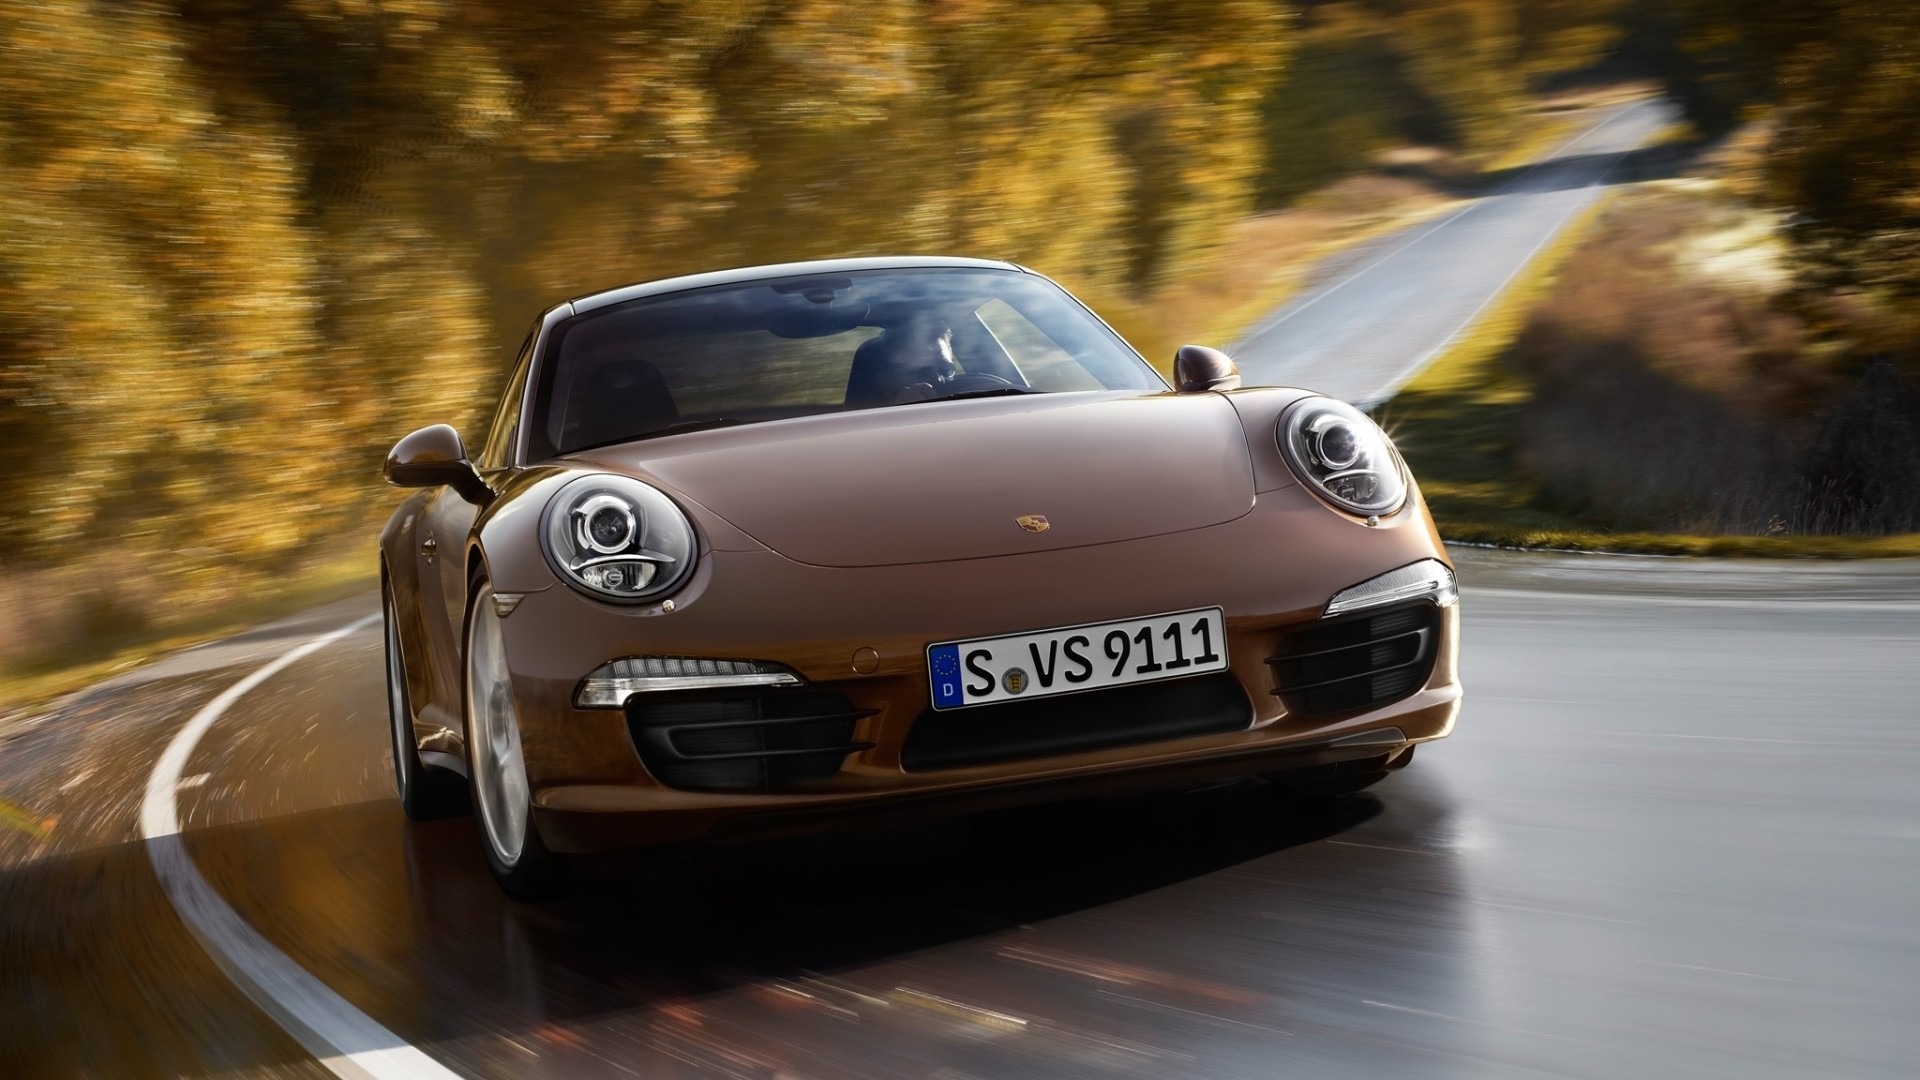 Porsche 911 HD Wallpapers 1080p Imagesize1920x1080 HD Wallpapers